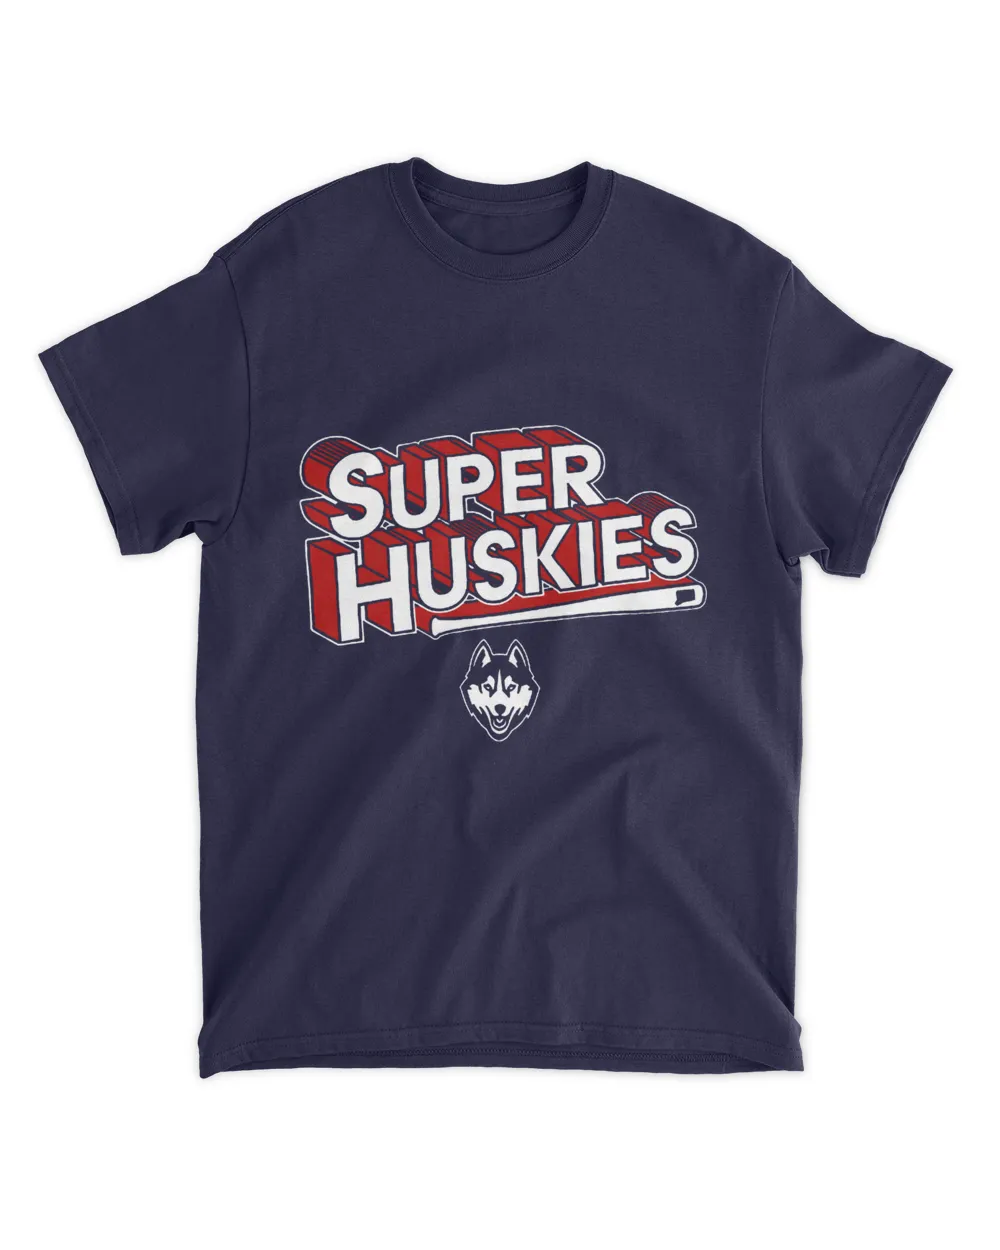 Uconn Baseball Super Huskies Shirt